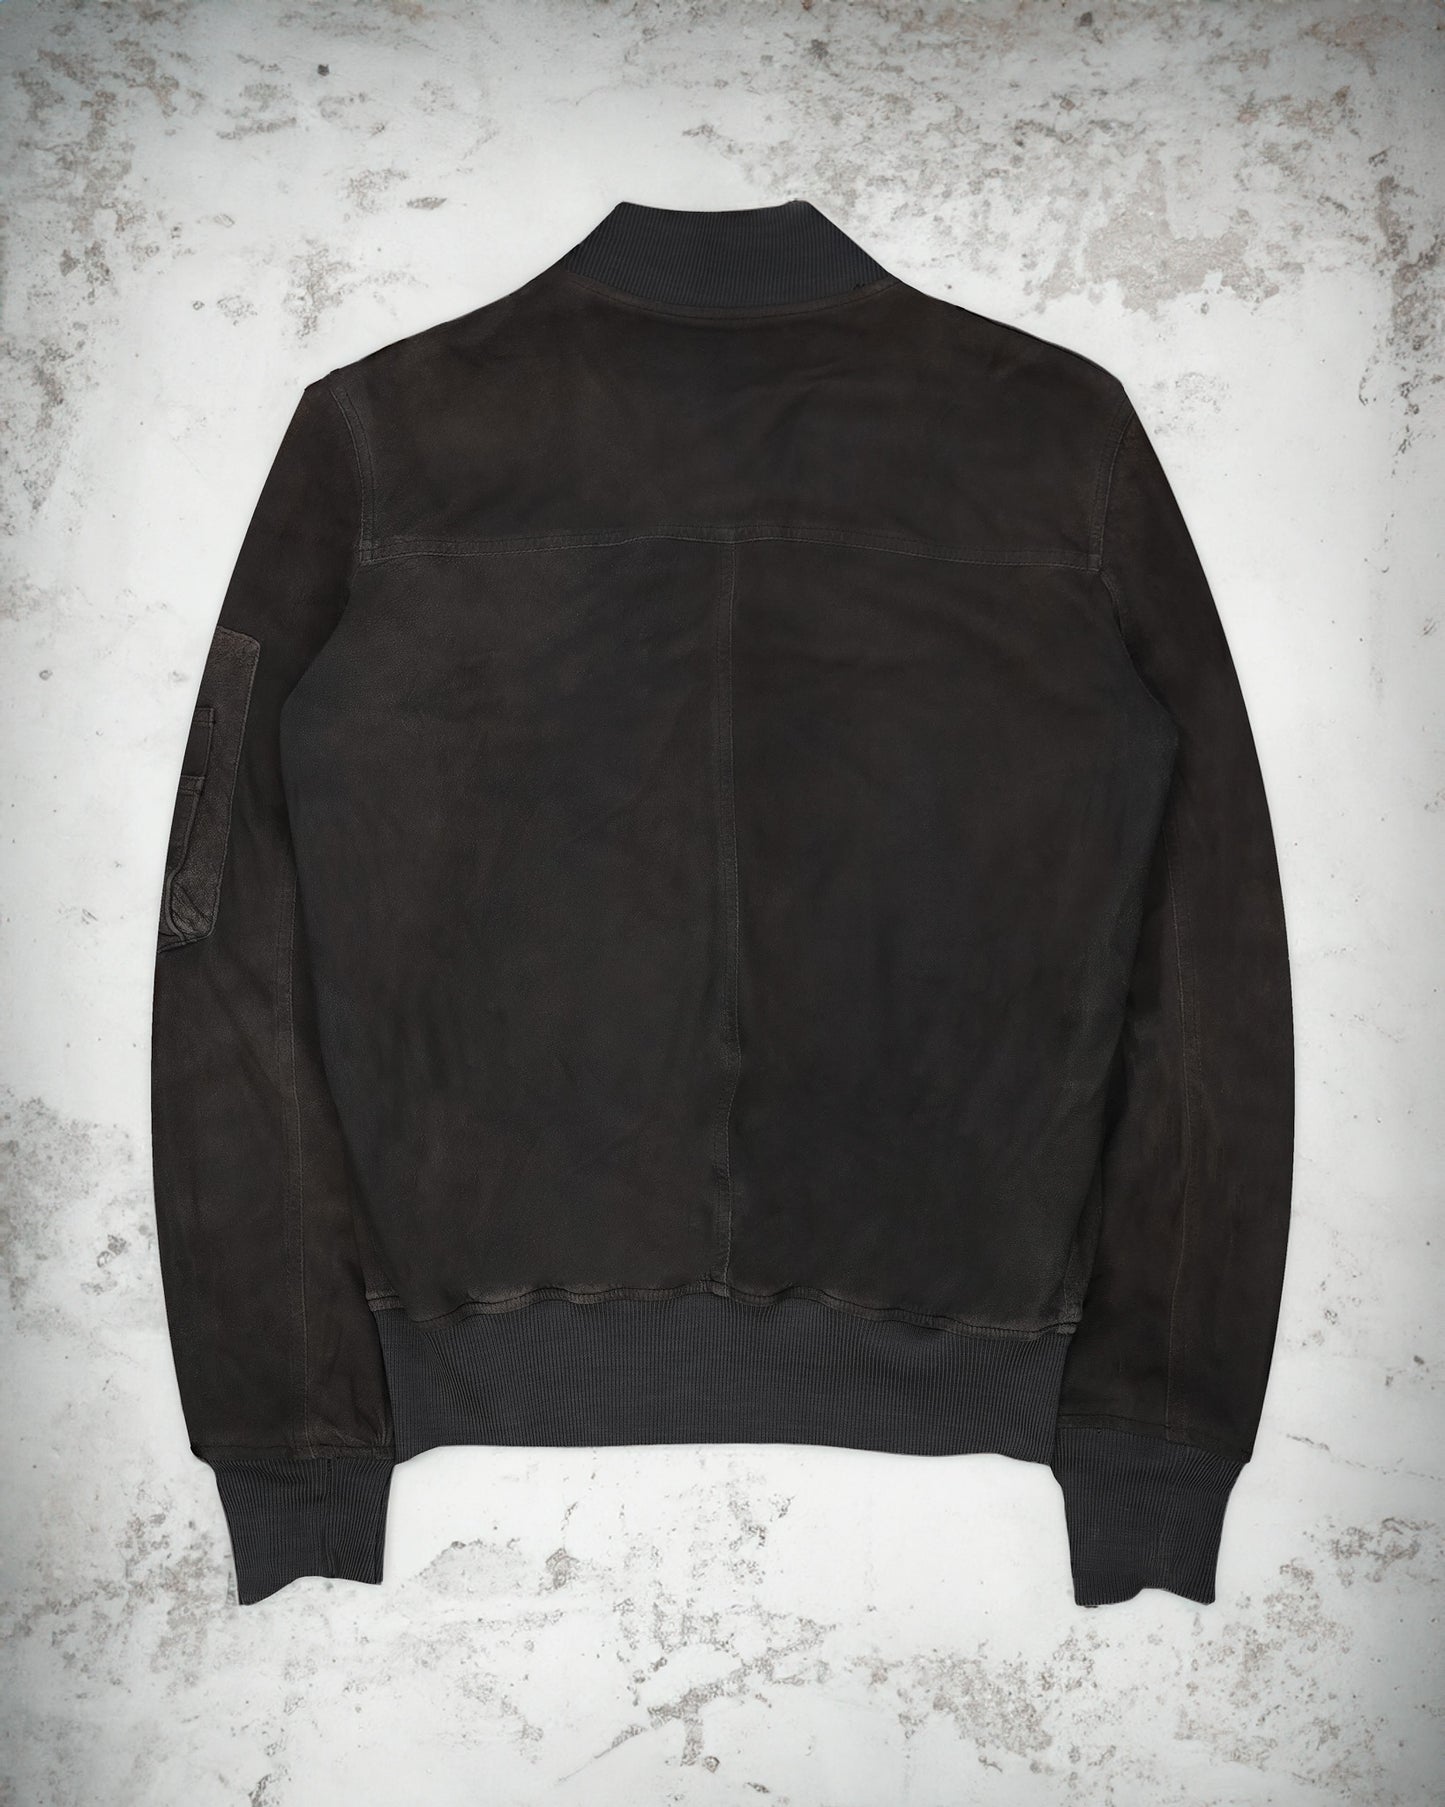 Rick Owens Blistered Leather Bomber Jacket